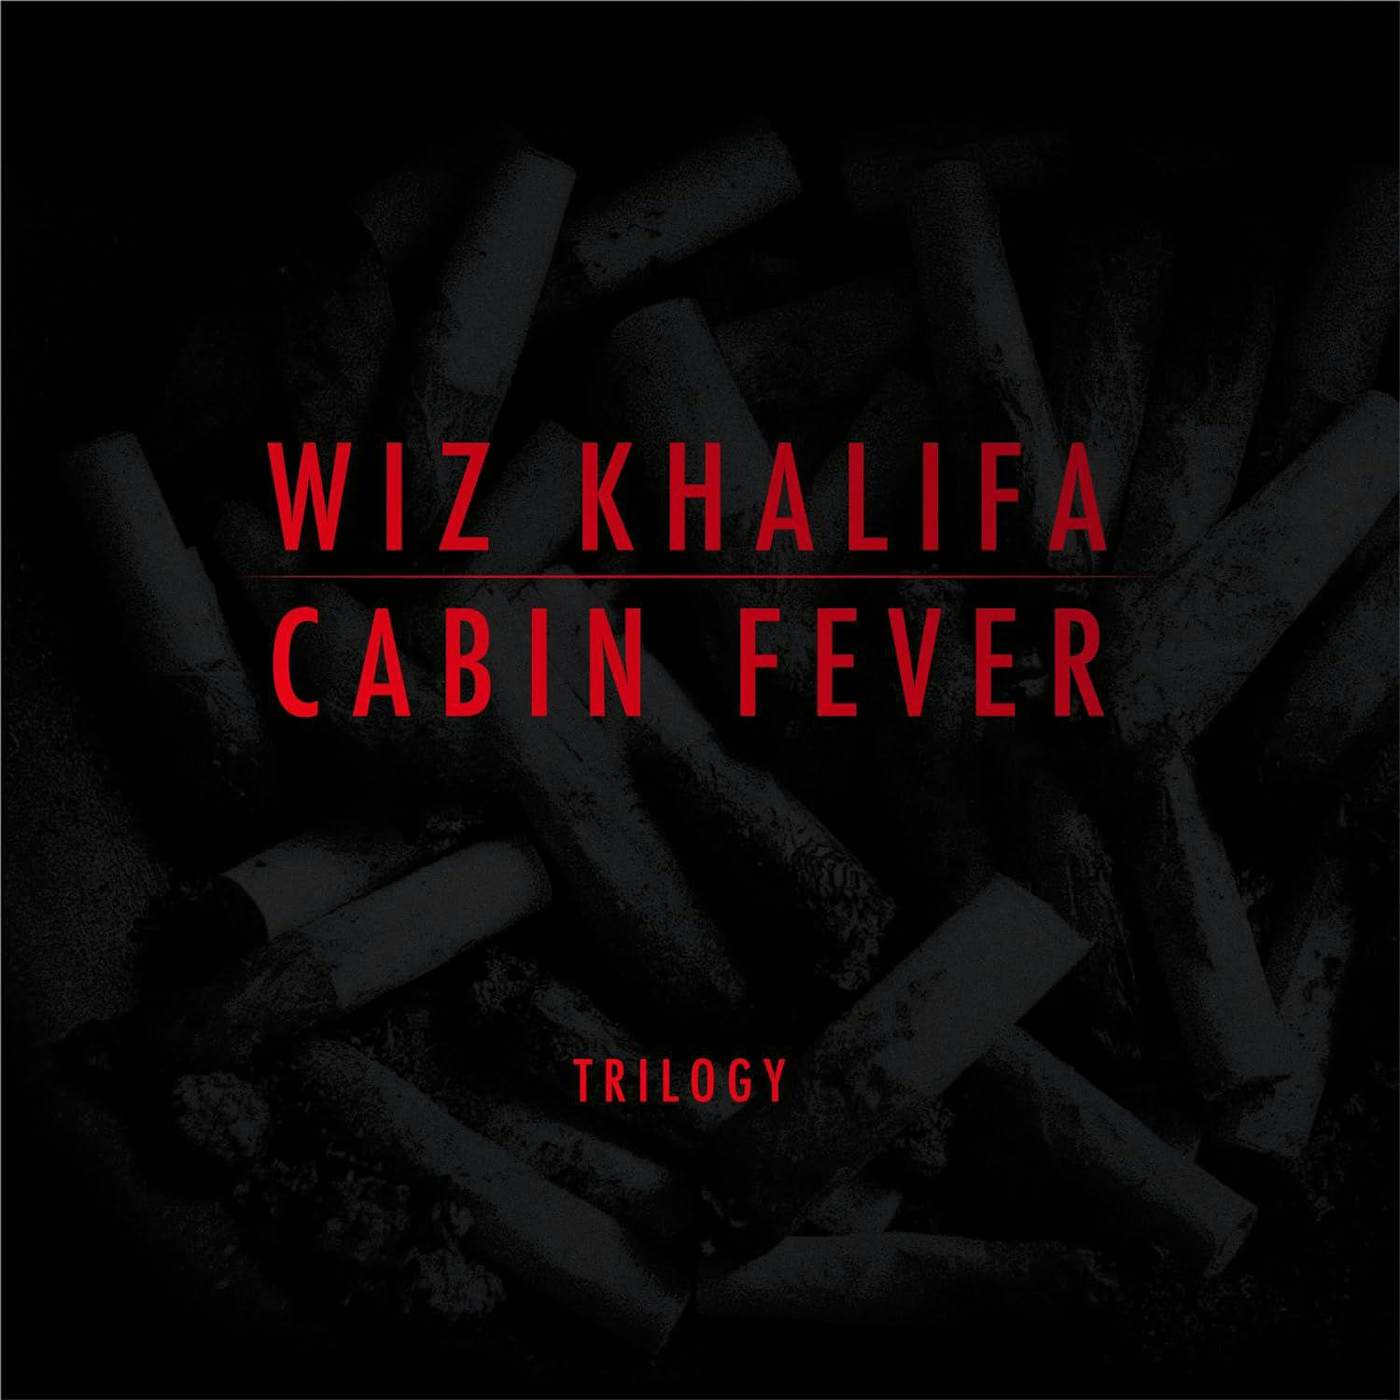 Wiz Khalifa Cabin Fever Trilogy Vinyl Record